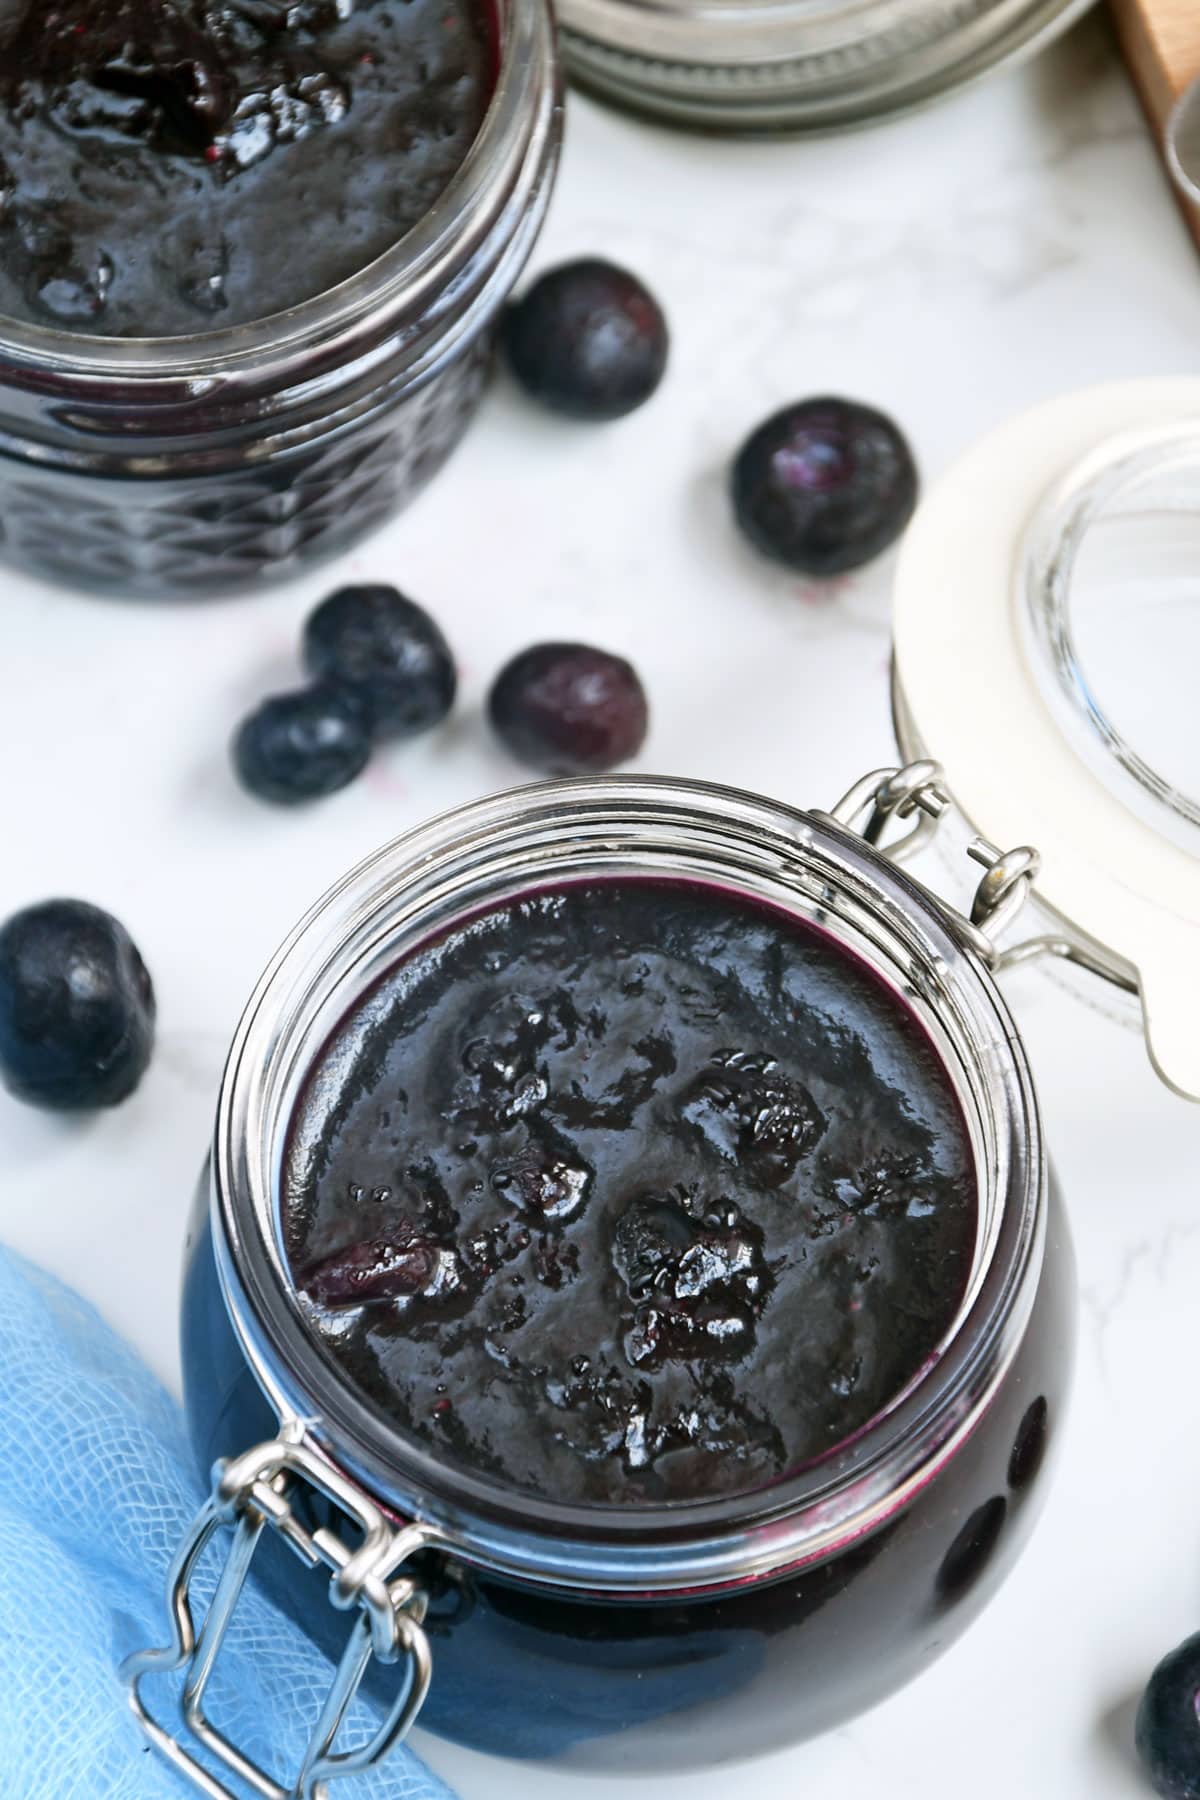 Blueberry jam in a jar.